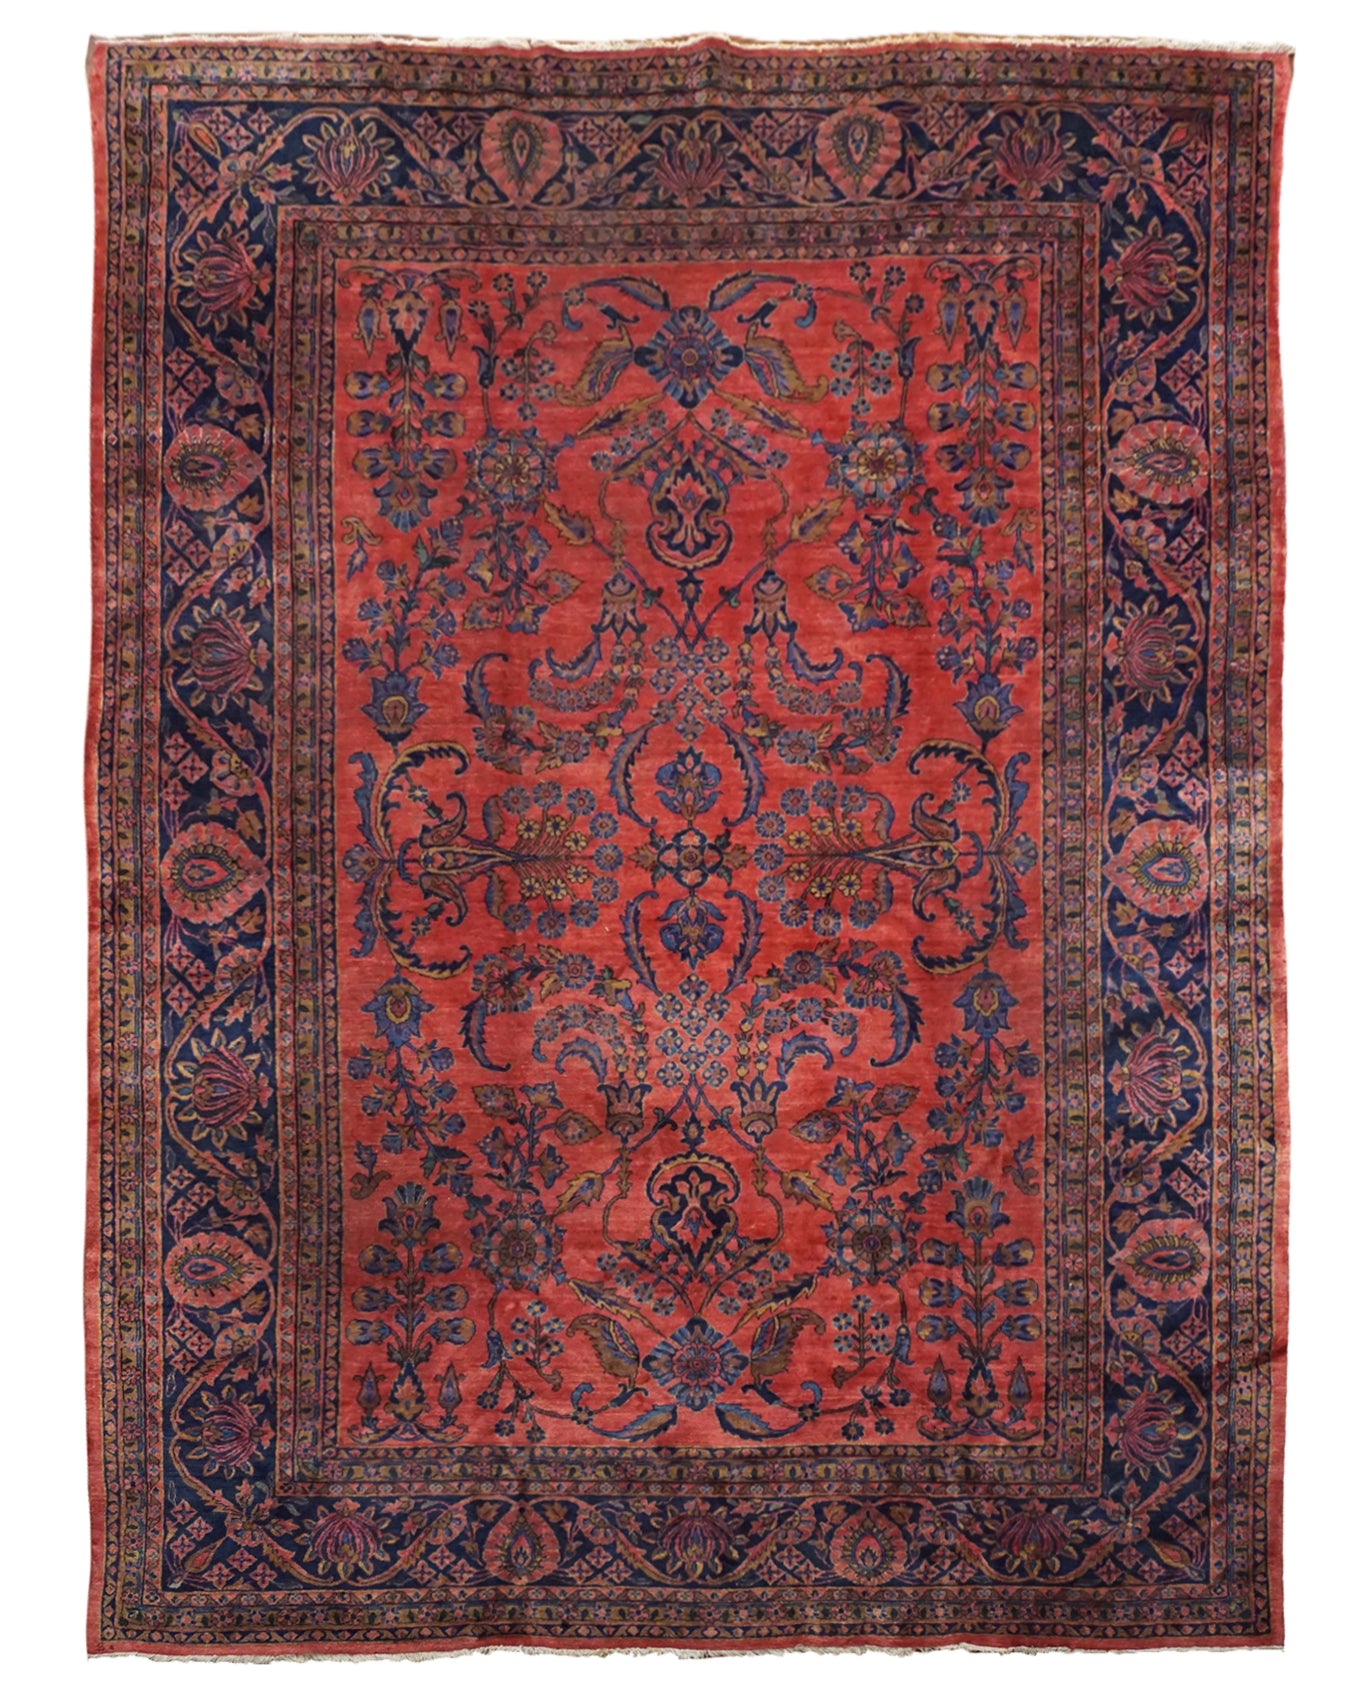 9X12 Antique Persian Sarouk Mohajeran Area Rug, circa 1900